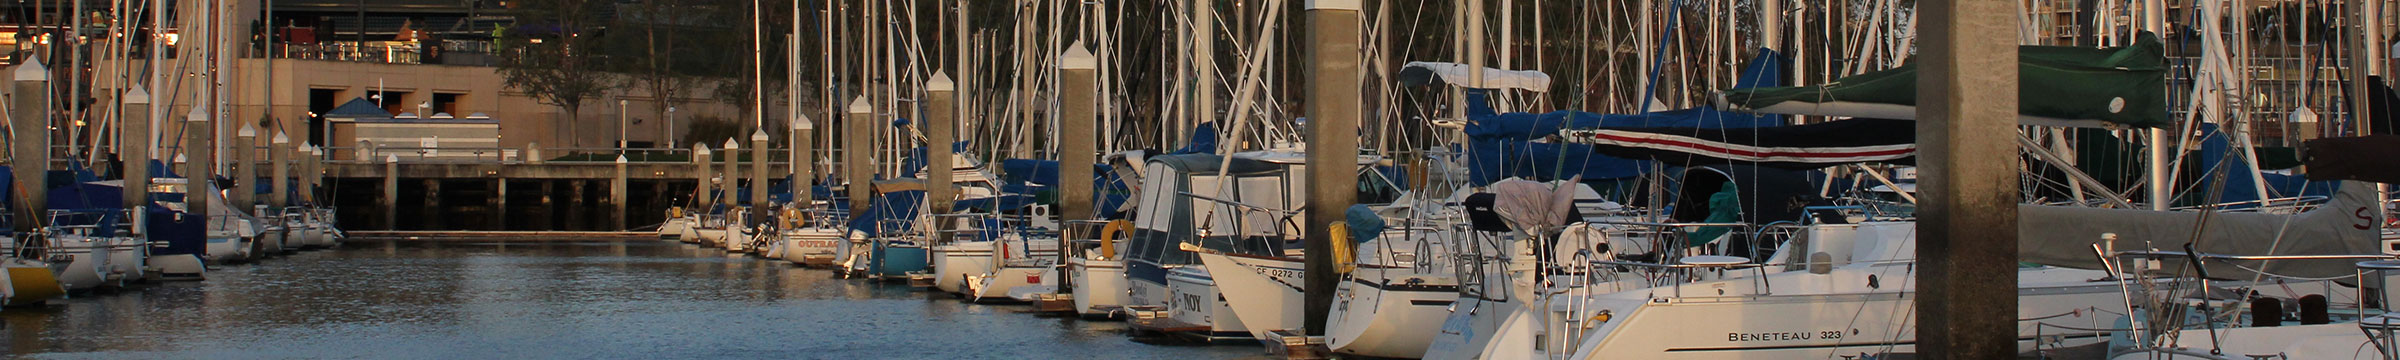 A dock with many boats